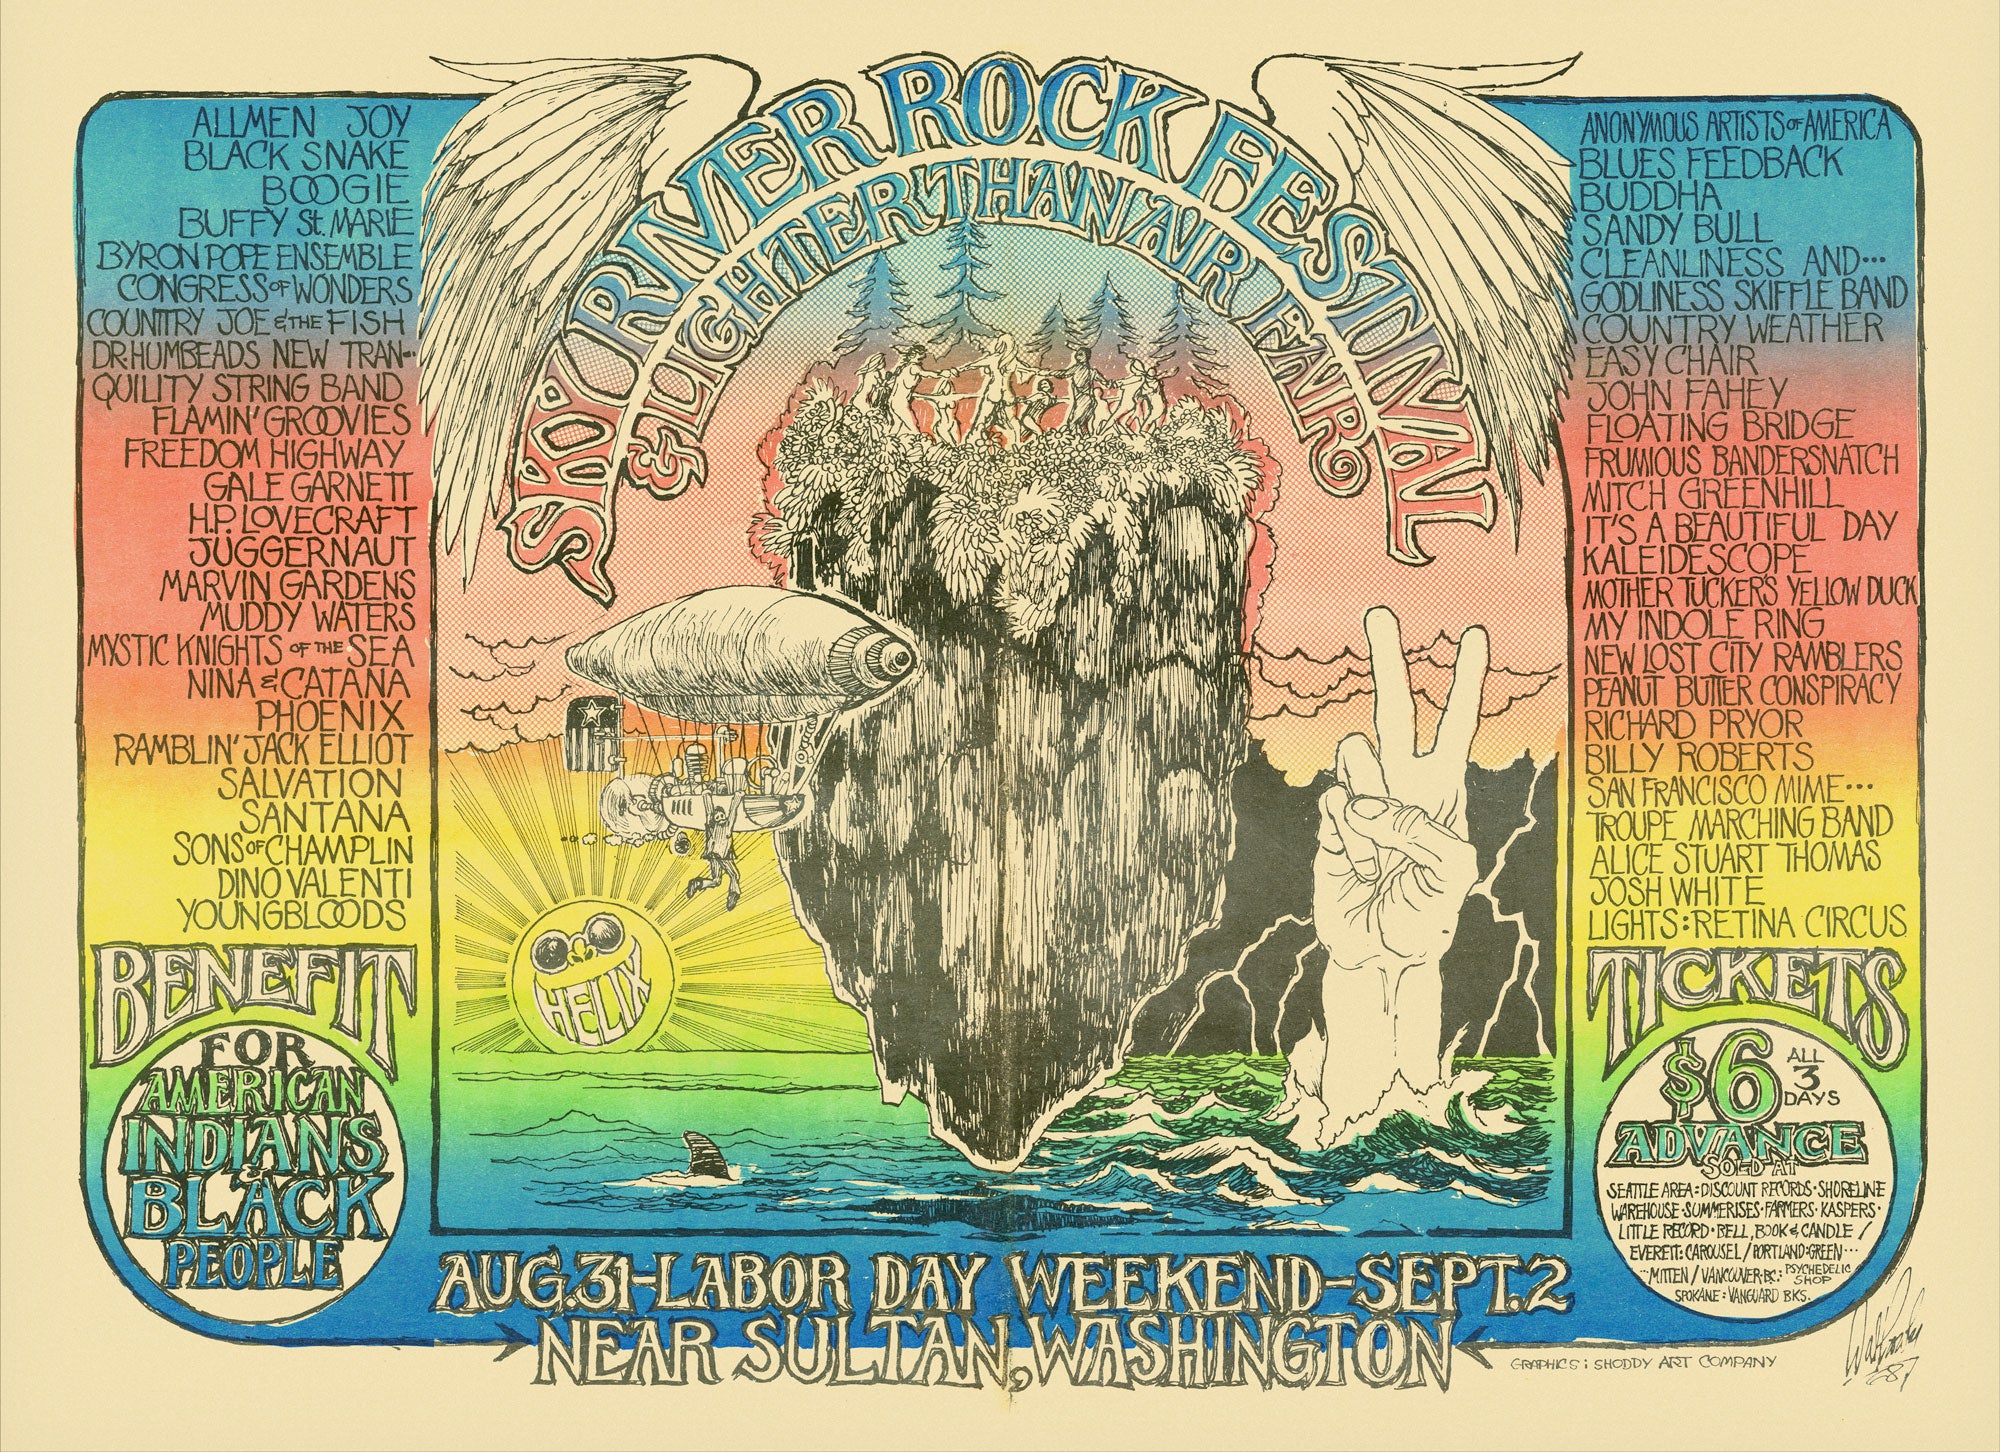 Sky River Rock Festival and Lighter Than Air Fair, Washington 1968